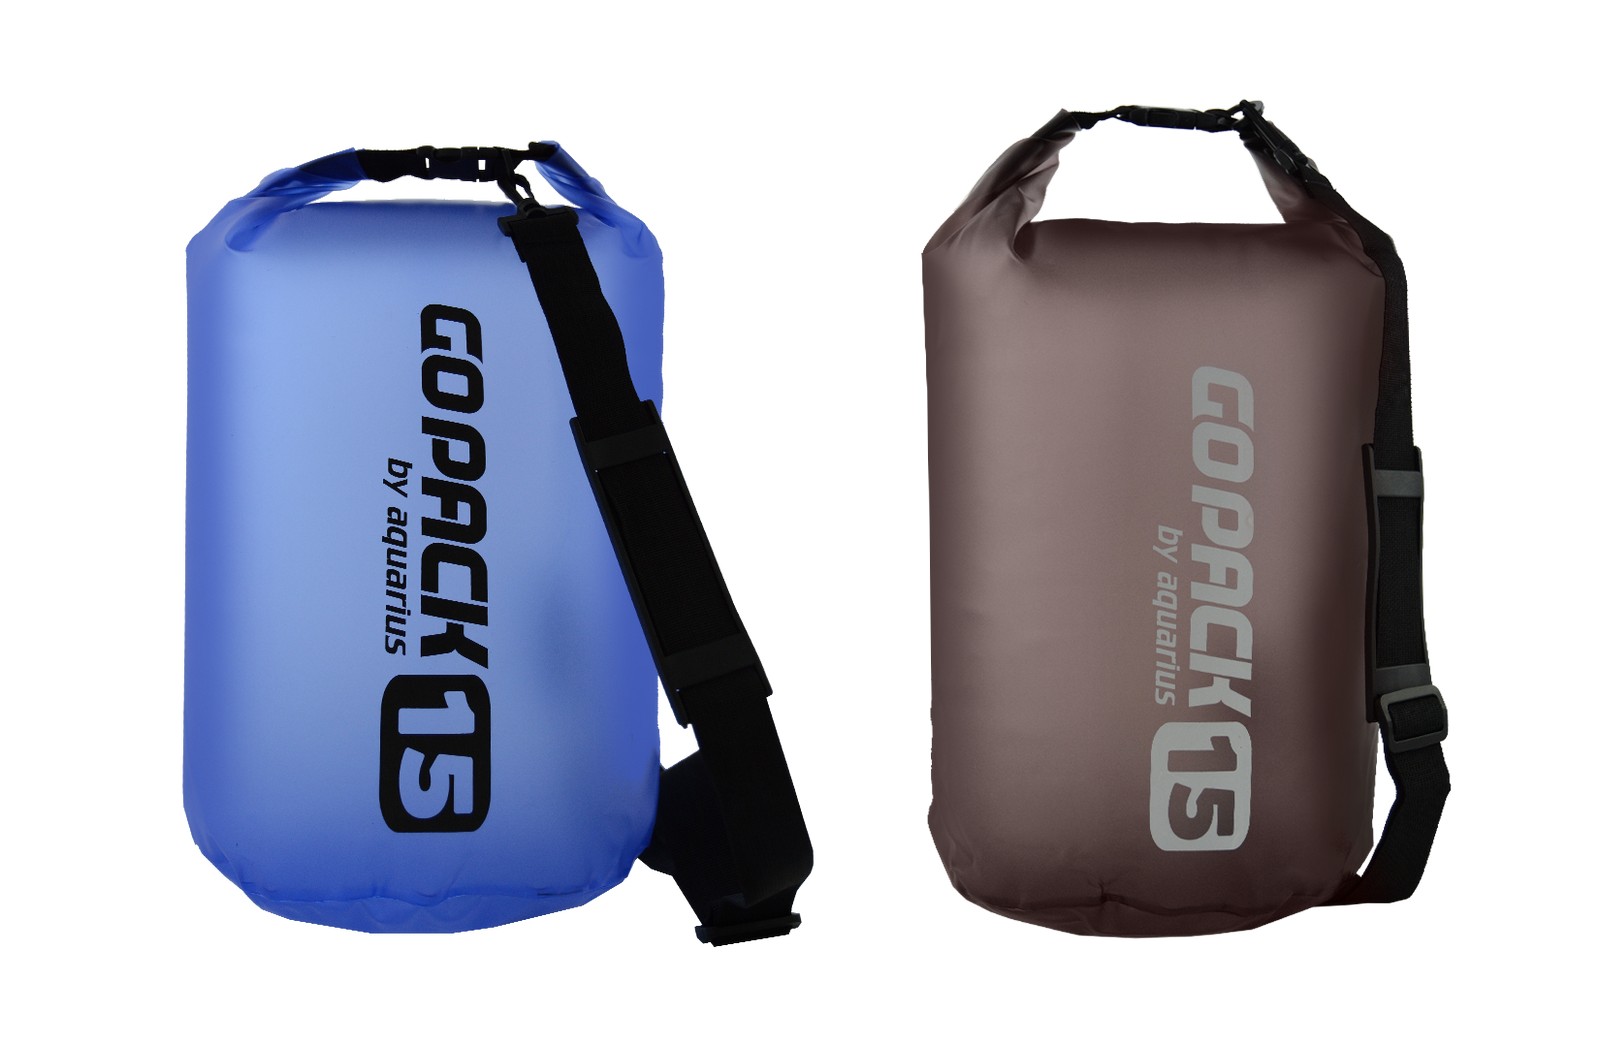 T+L Editors Love the Notag Waterproof Crossbody Bag